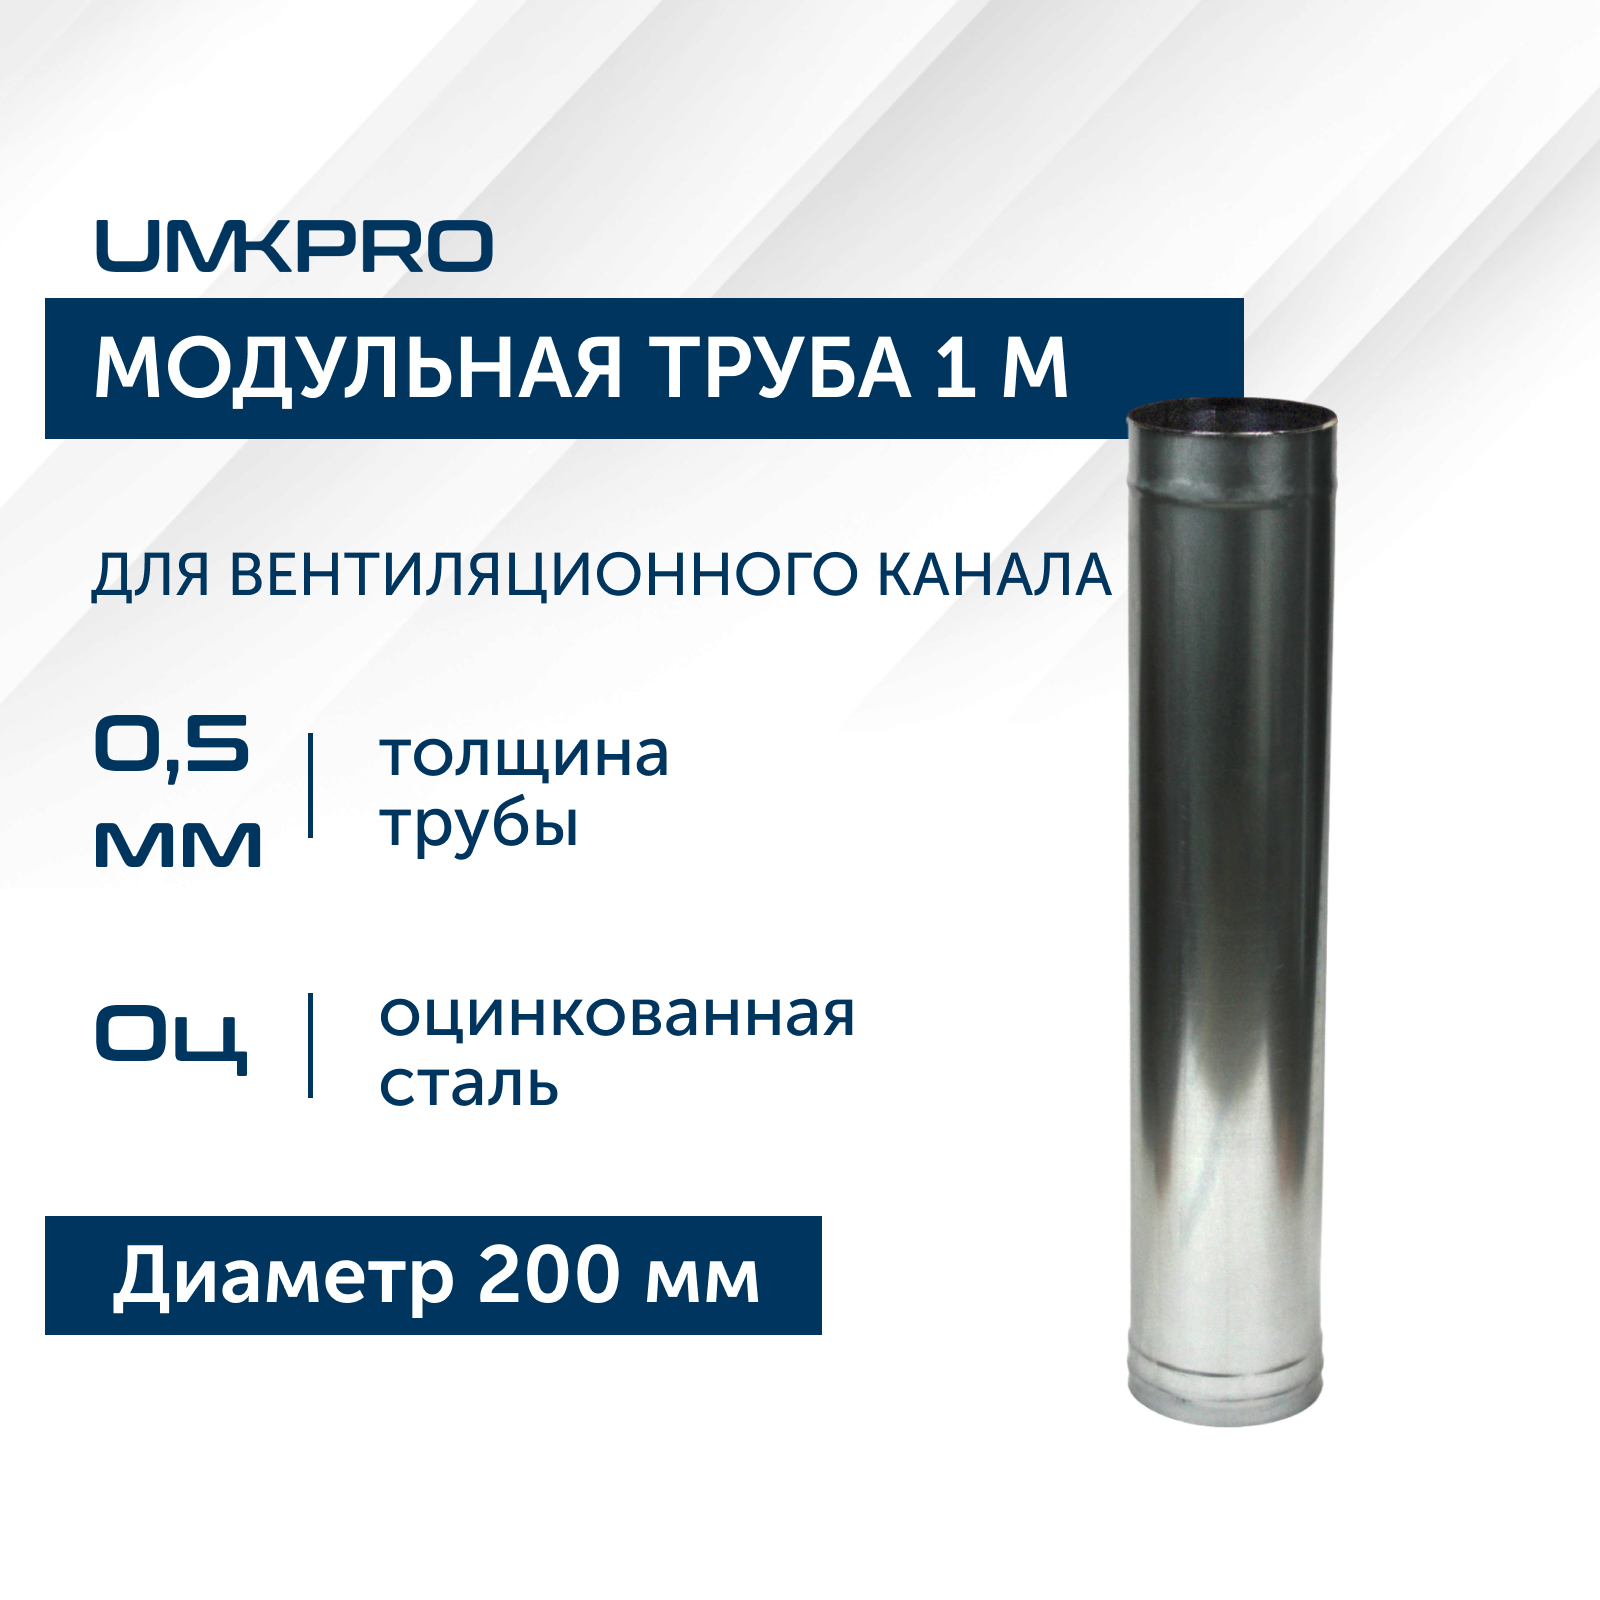 Труба модульная для дымохода 1 м UMKPRO, D 200, Оц/0,5мм модульная прихожая гарун комплектация 4 арктика